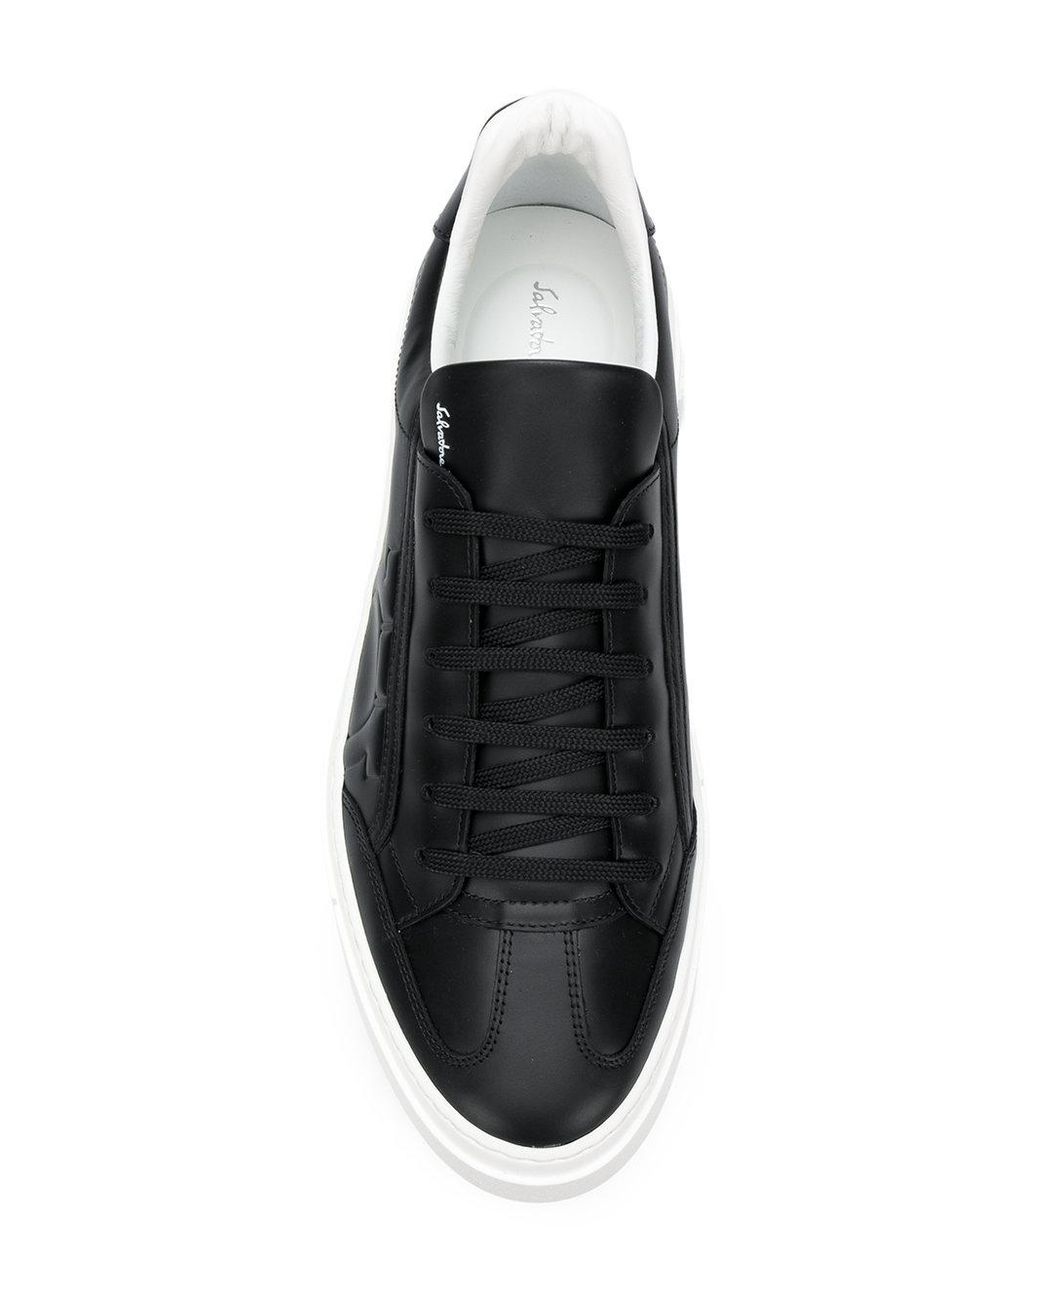 Ferragamo Salvatore Men's Borg Gancini Leather Sneakers